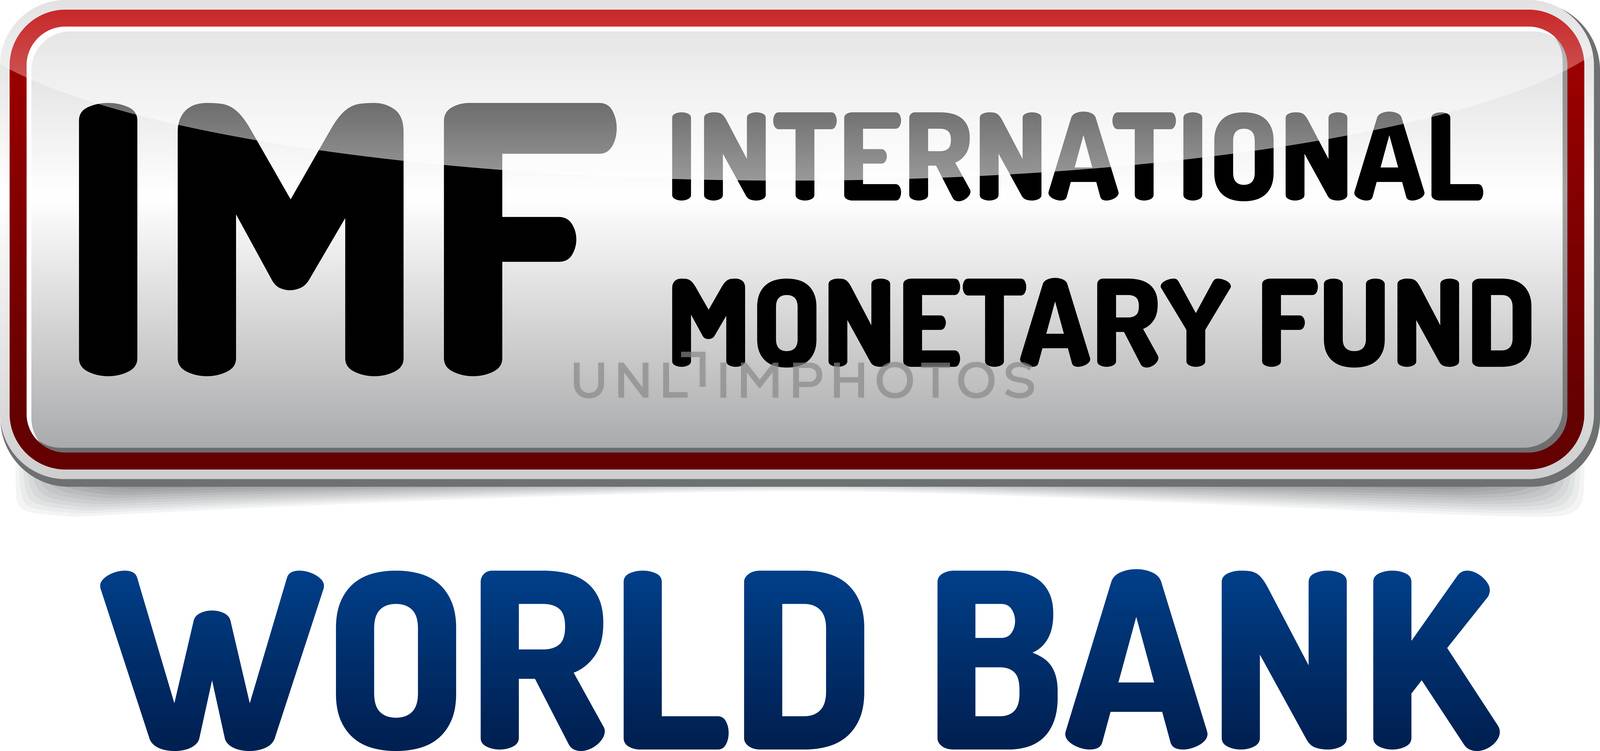 IMF International Monetary Fund - Illustration board with reflection and shadow on white background